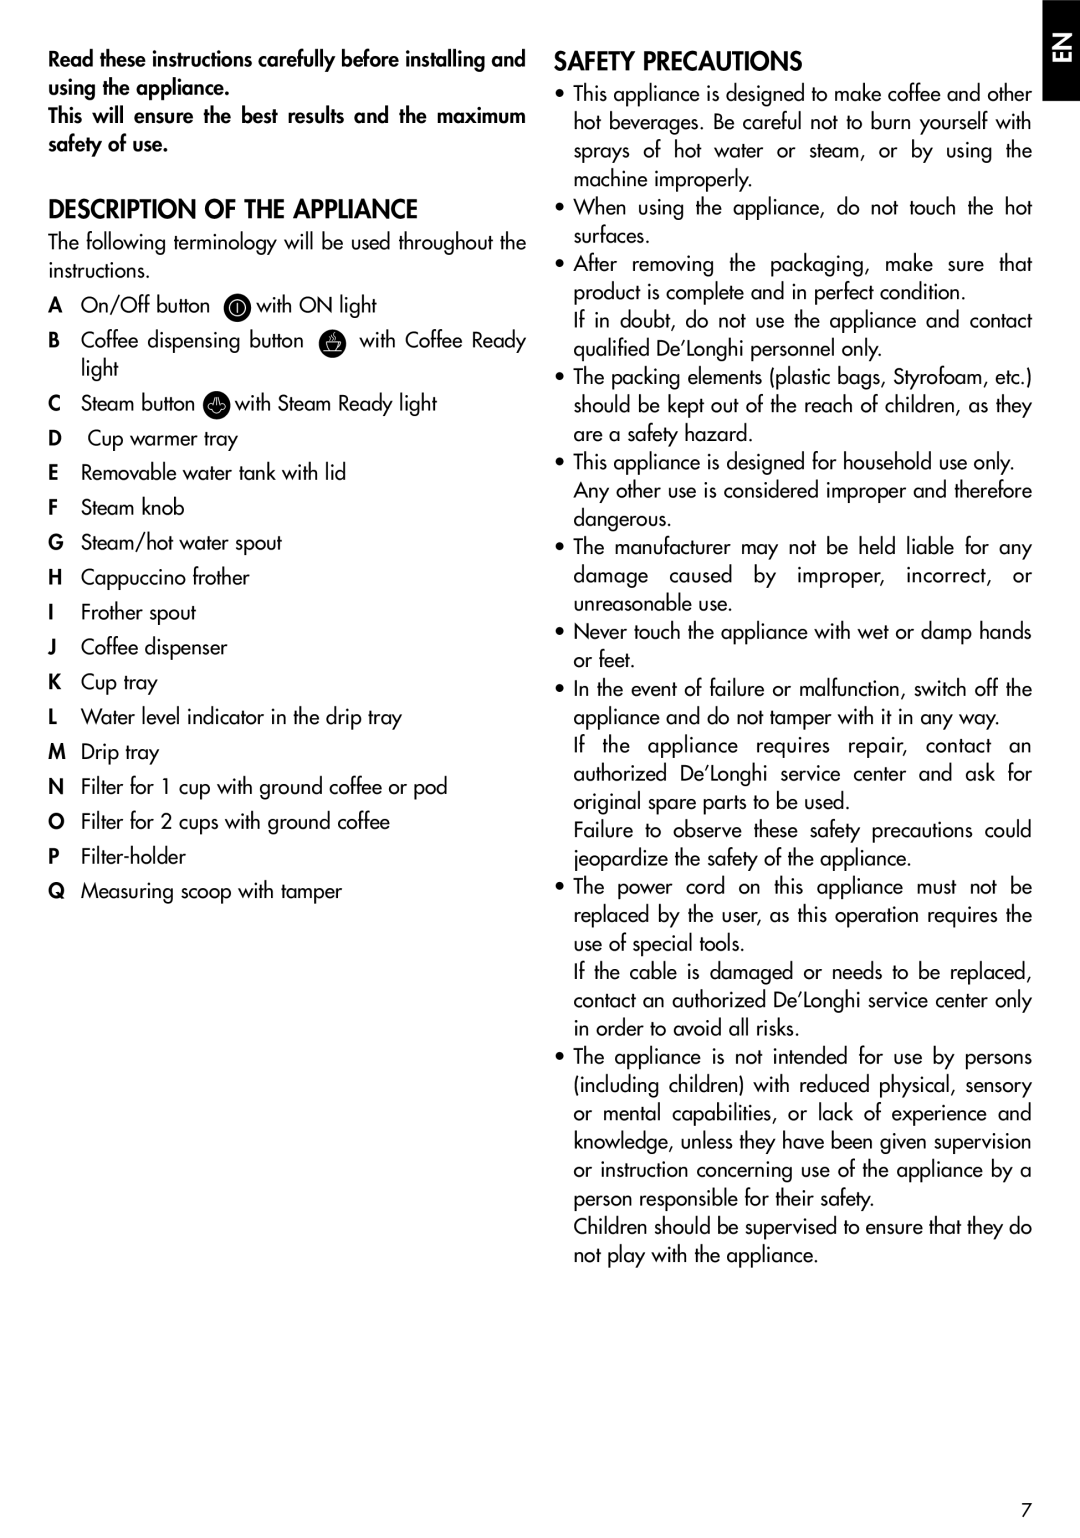 DeLonghi EC270 manual Description Of The Appliance, Safety Precautions 